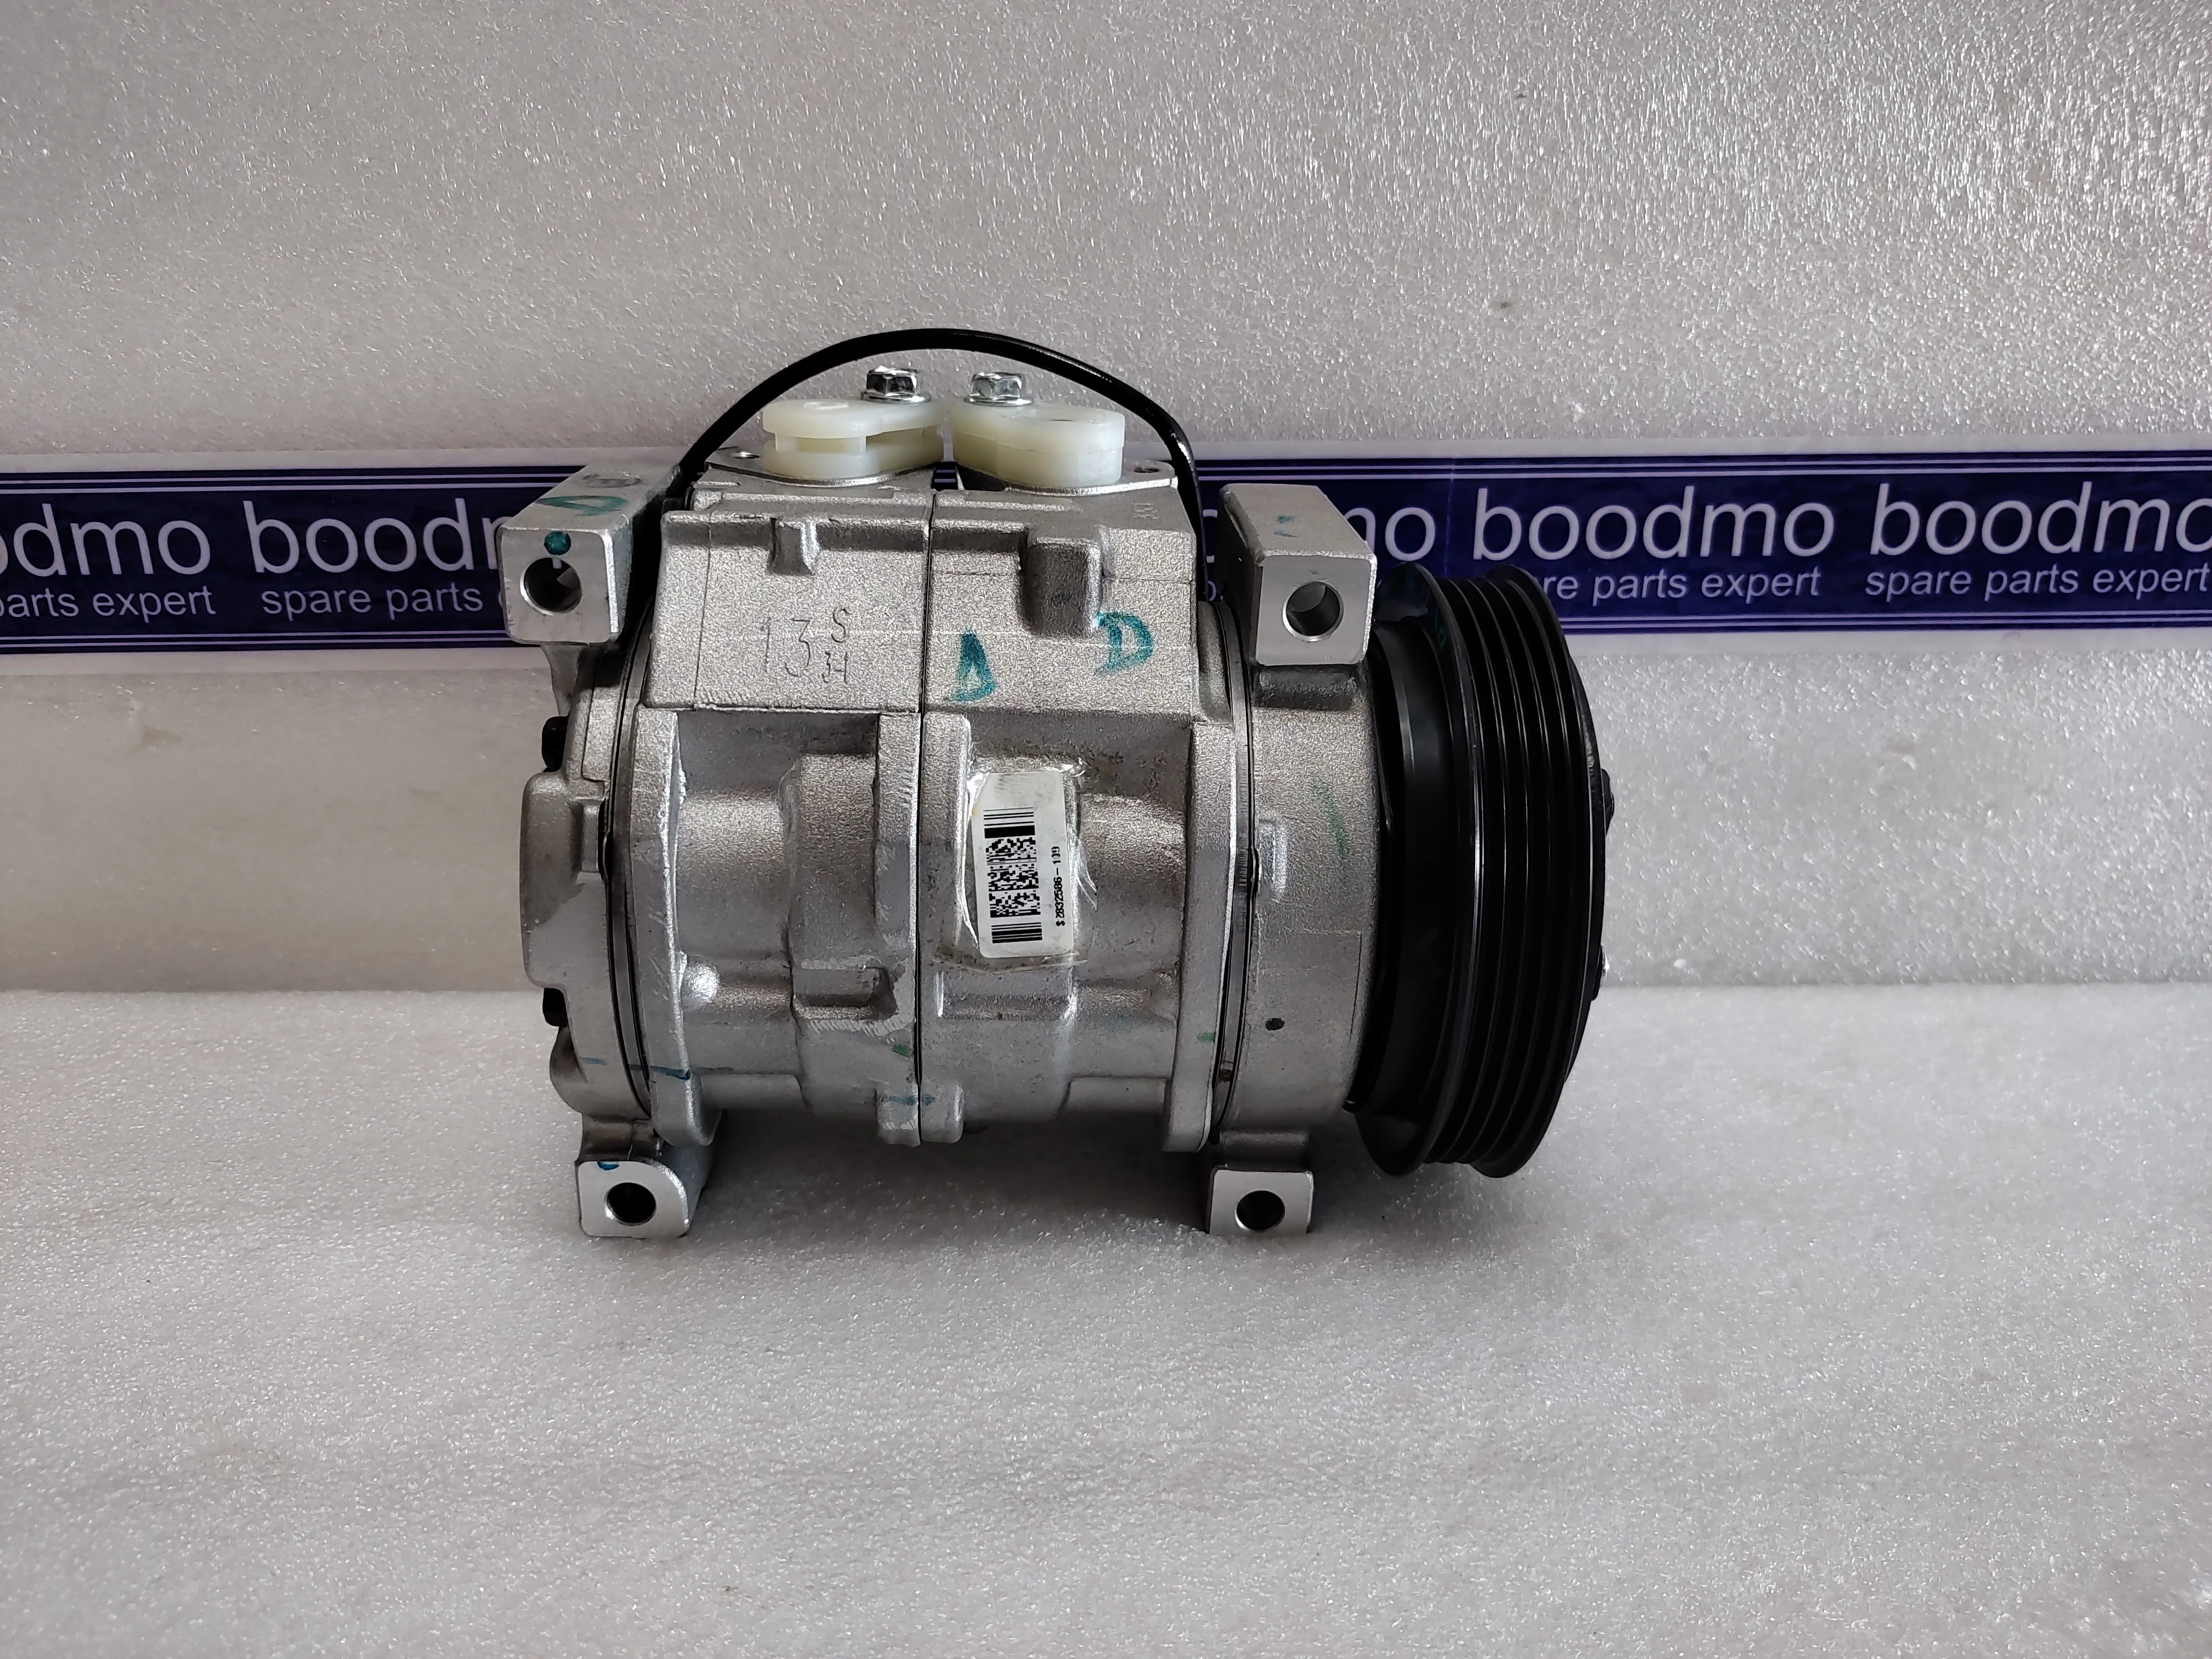 Compressor: Subros 64710080-0-H -compatibility, features, prices. boodmo